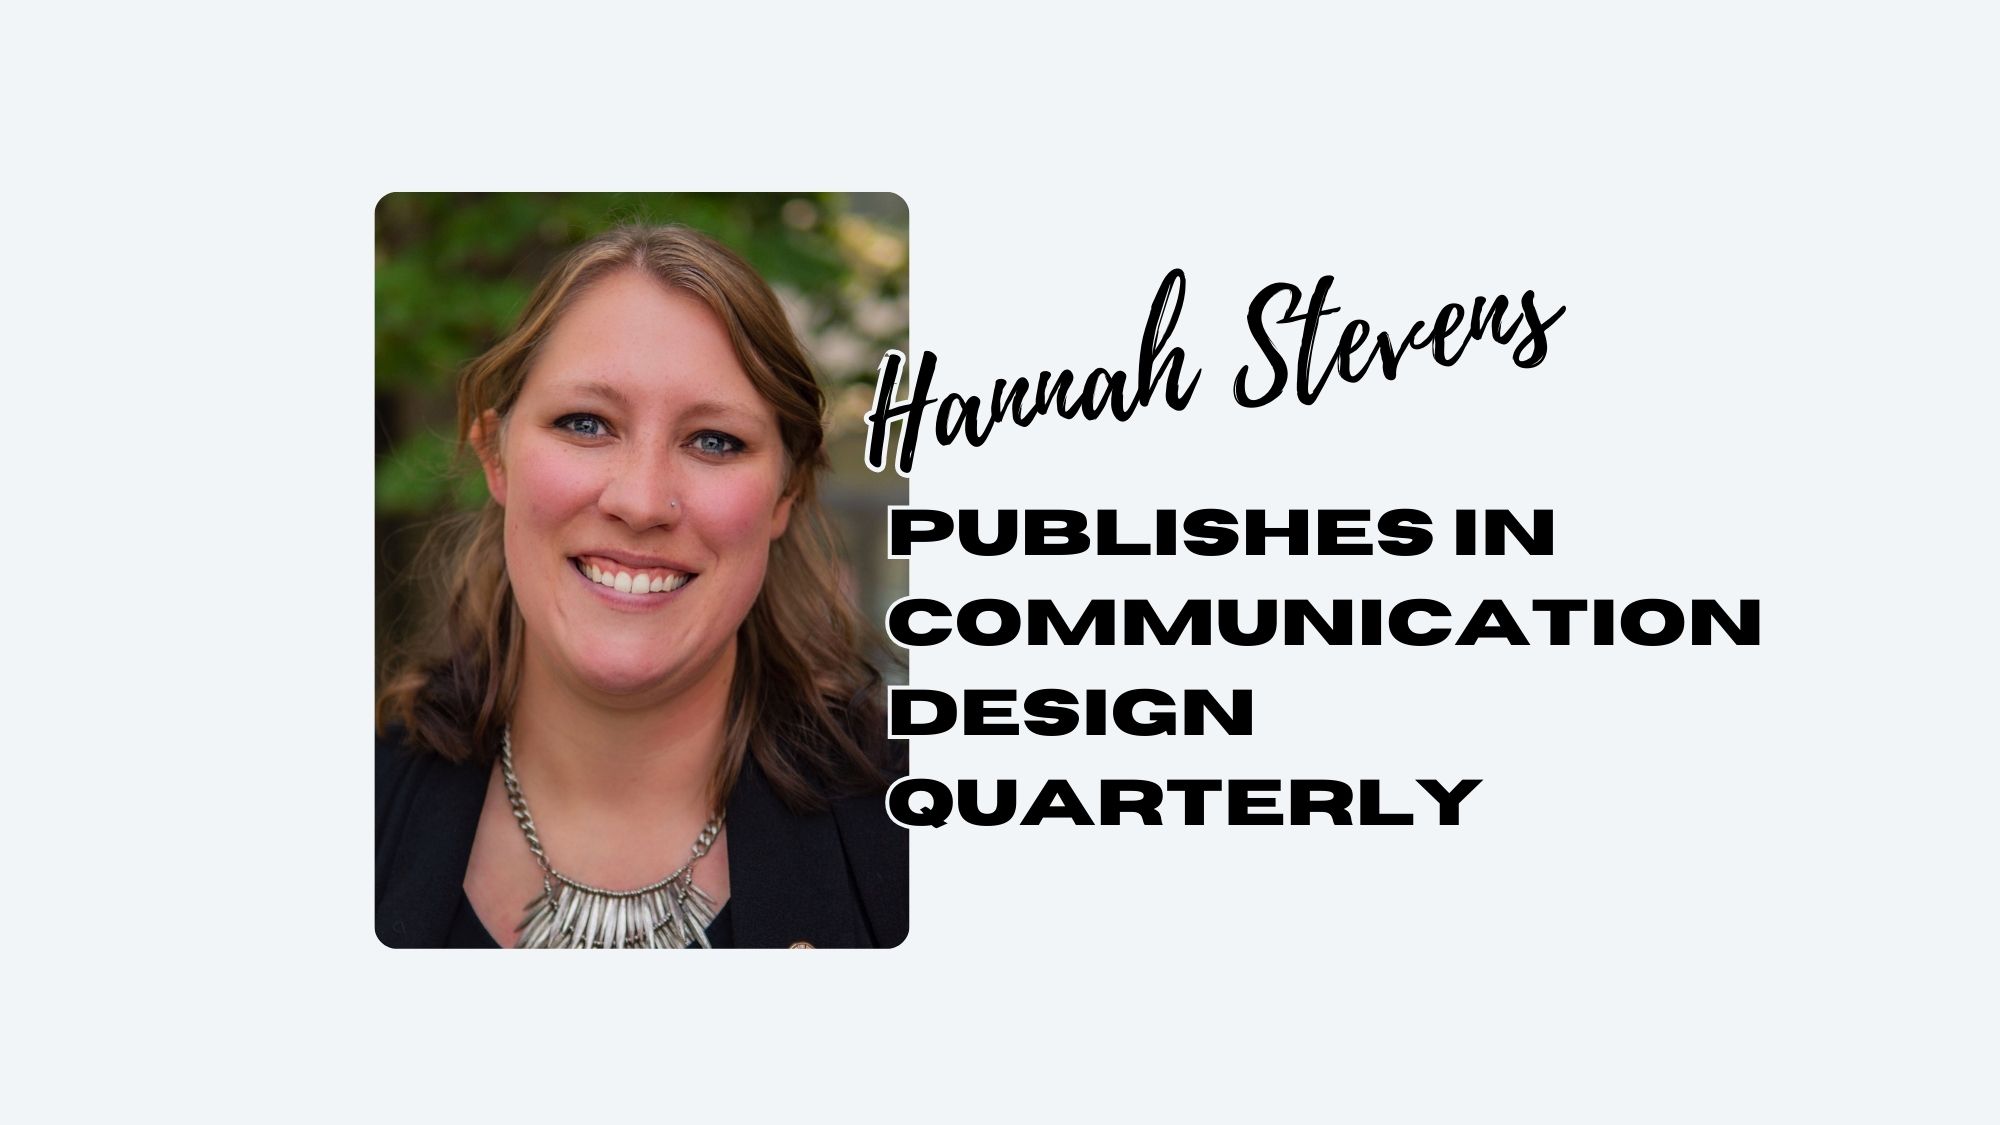 Hannah Stevens Publishes in Communication Design Quarterly